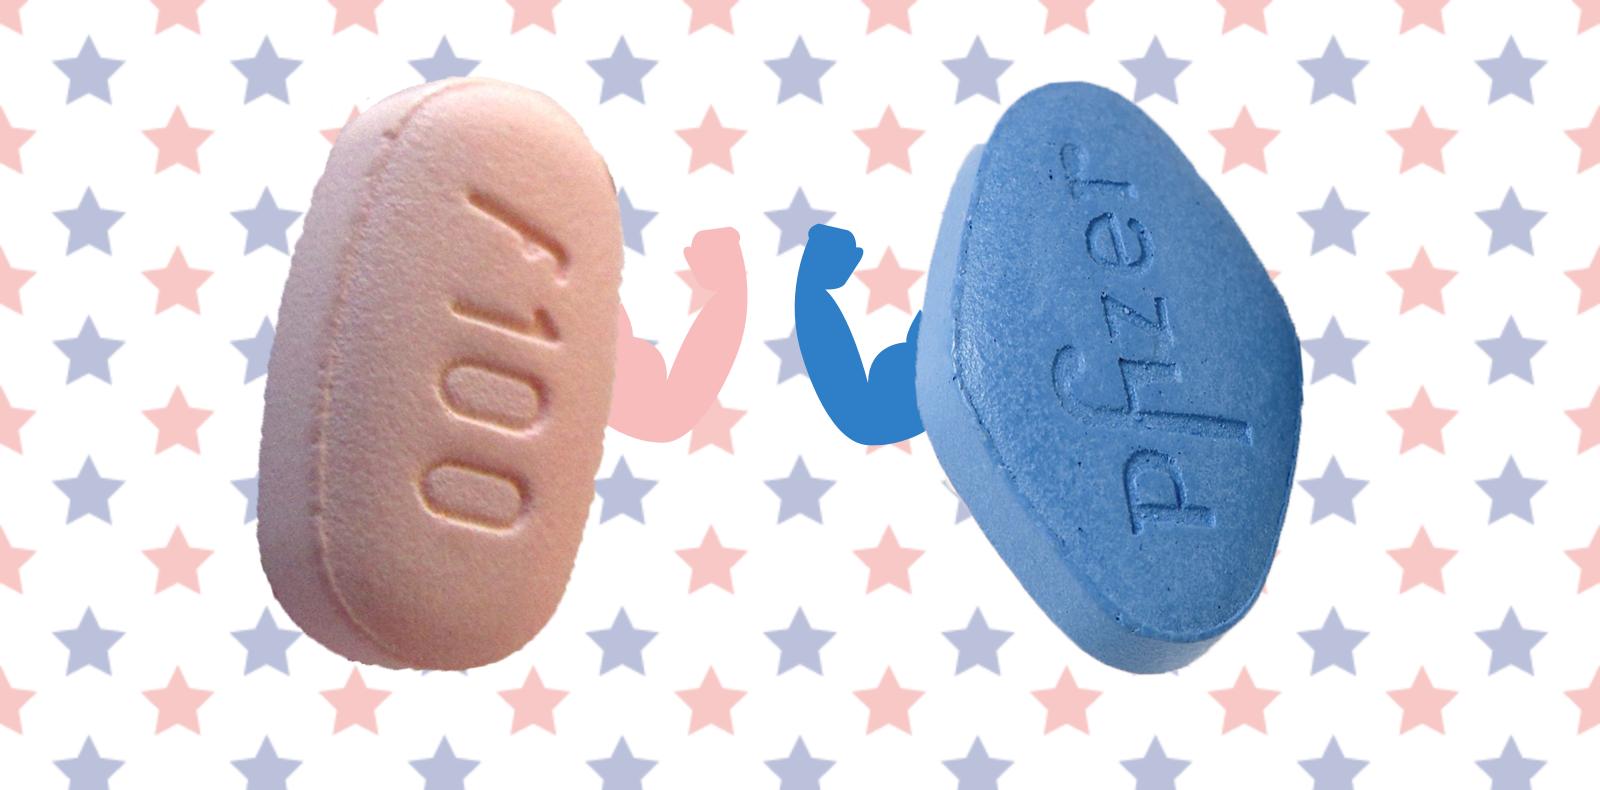 Pink pill vs